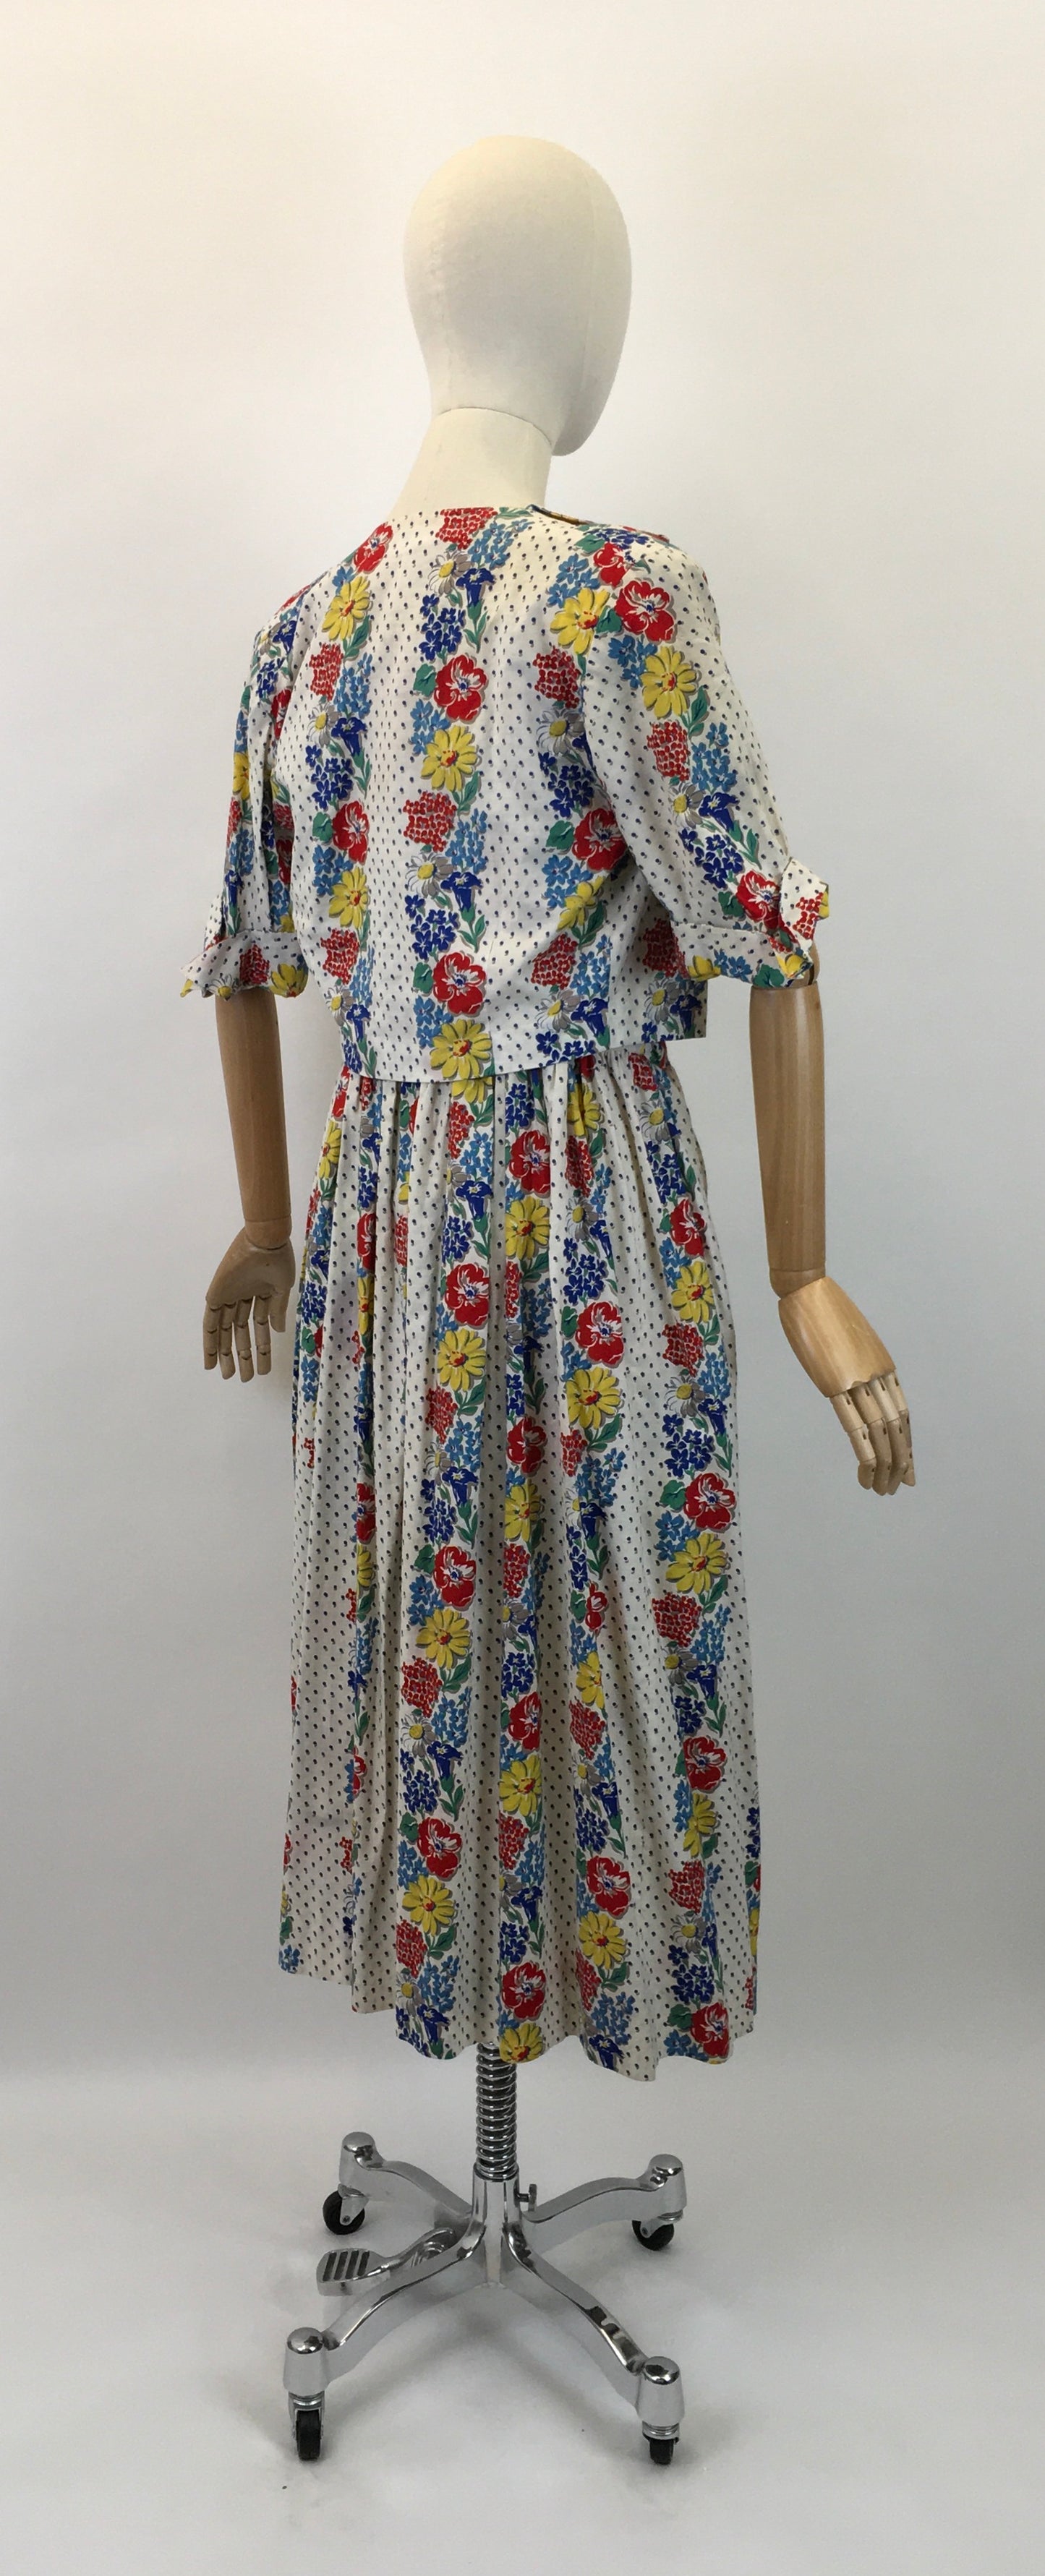 Original Stunning 1940's Sundress & Bolero - In A Bright Summer Floral Print Cotton